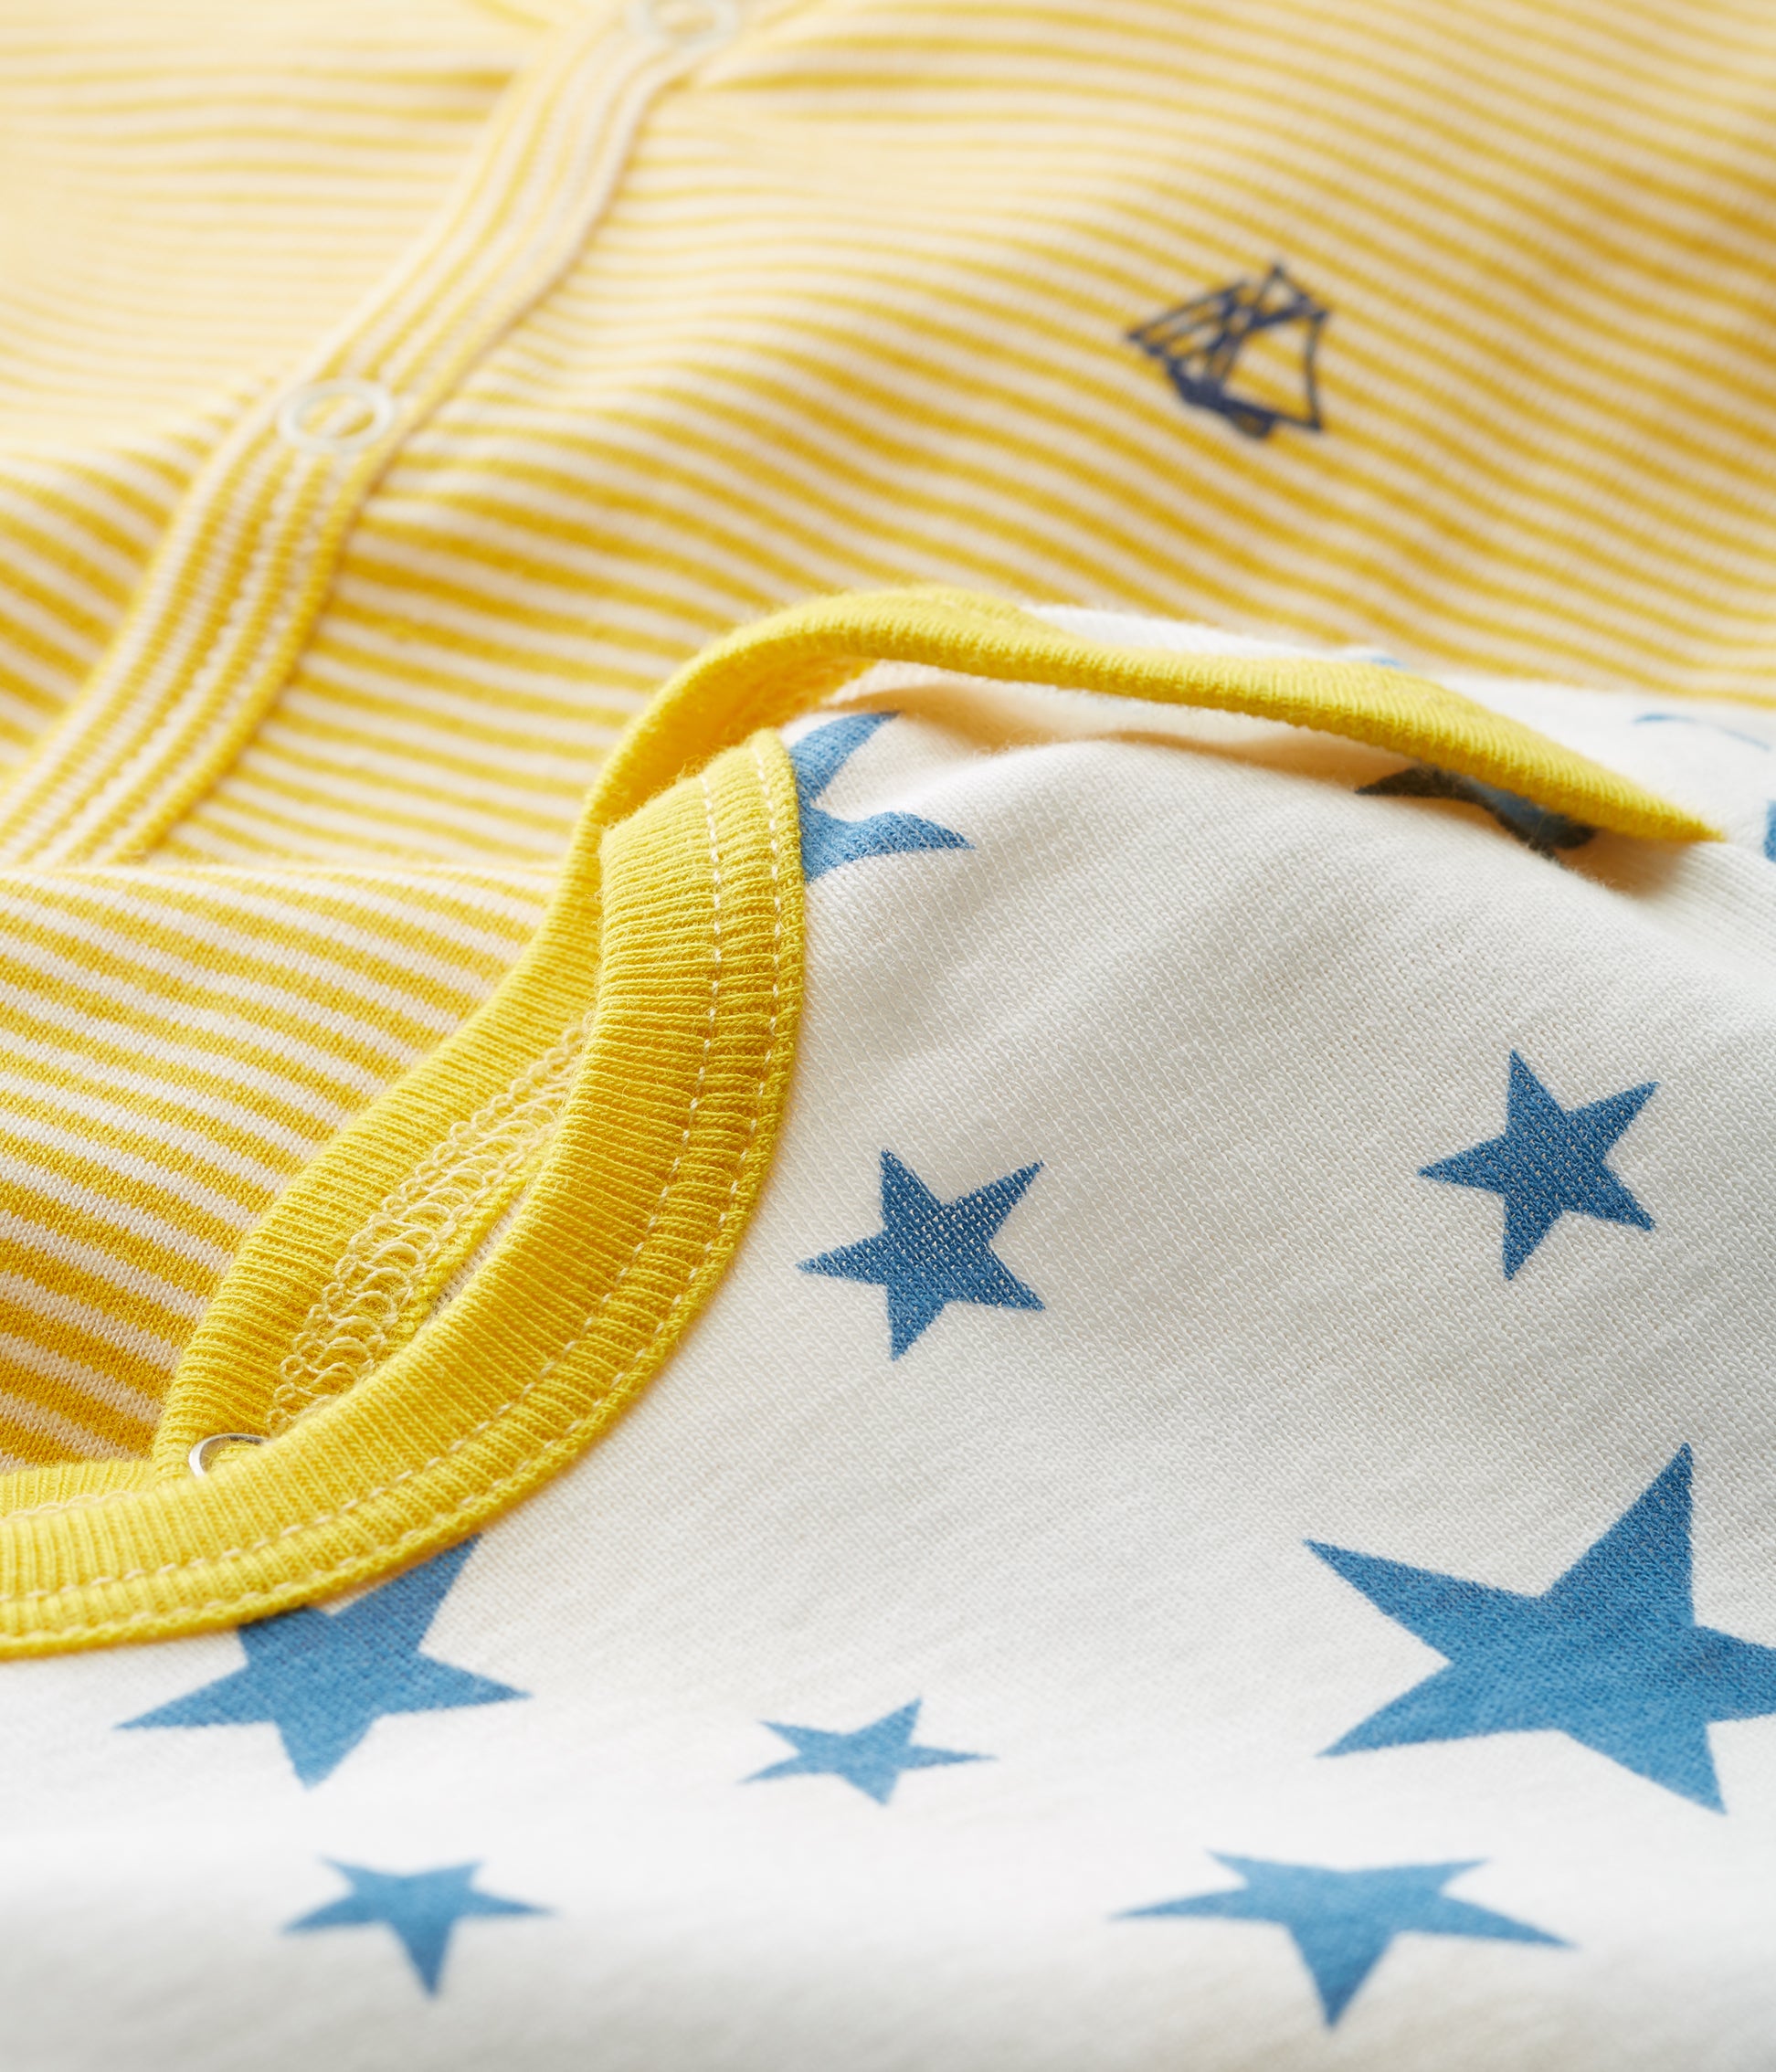 Baby Boys & Girls Yellow & White Star Cotton Sets